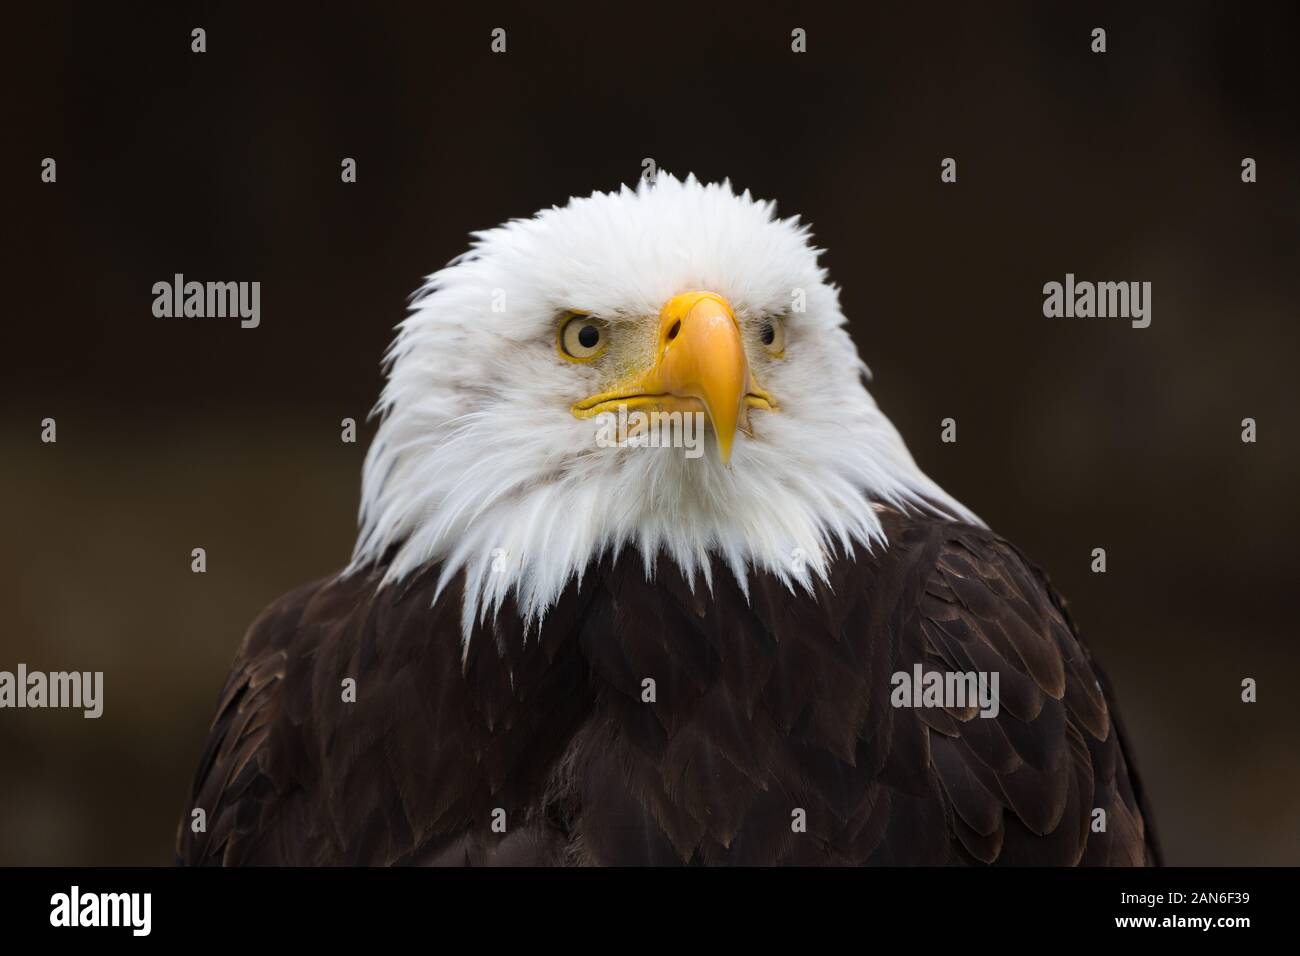 Símbolo nacional fotografías e imágenes de alta resolución - Alamy